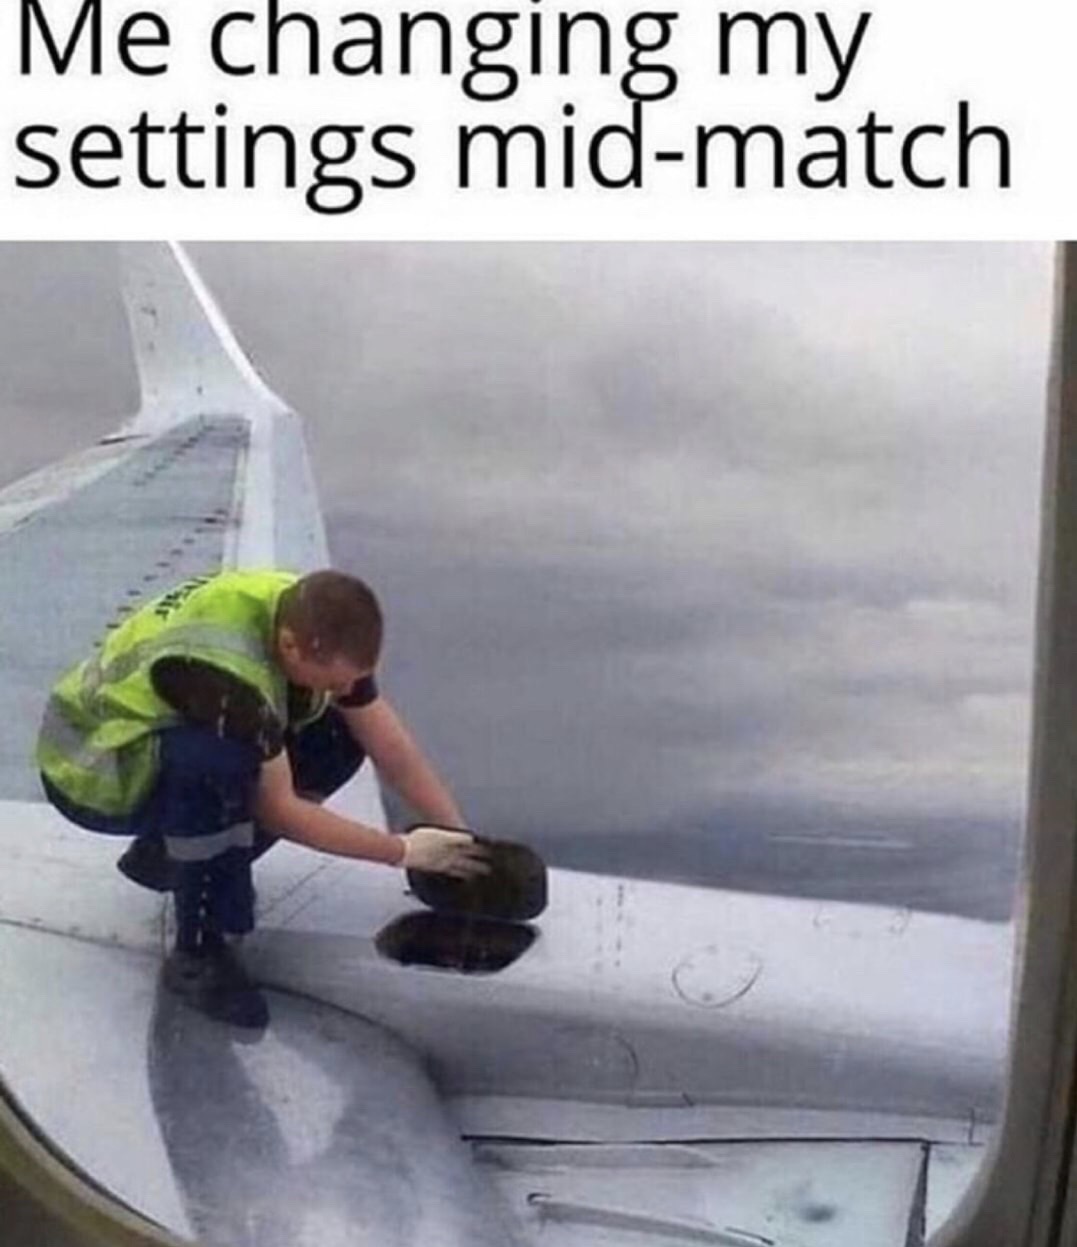 settings change meme - Me changing my settings midmatch